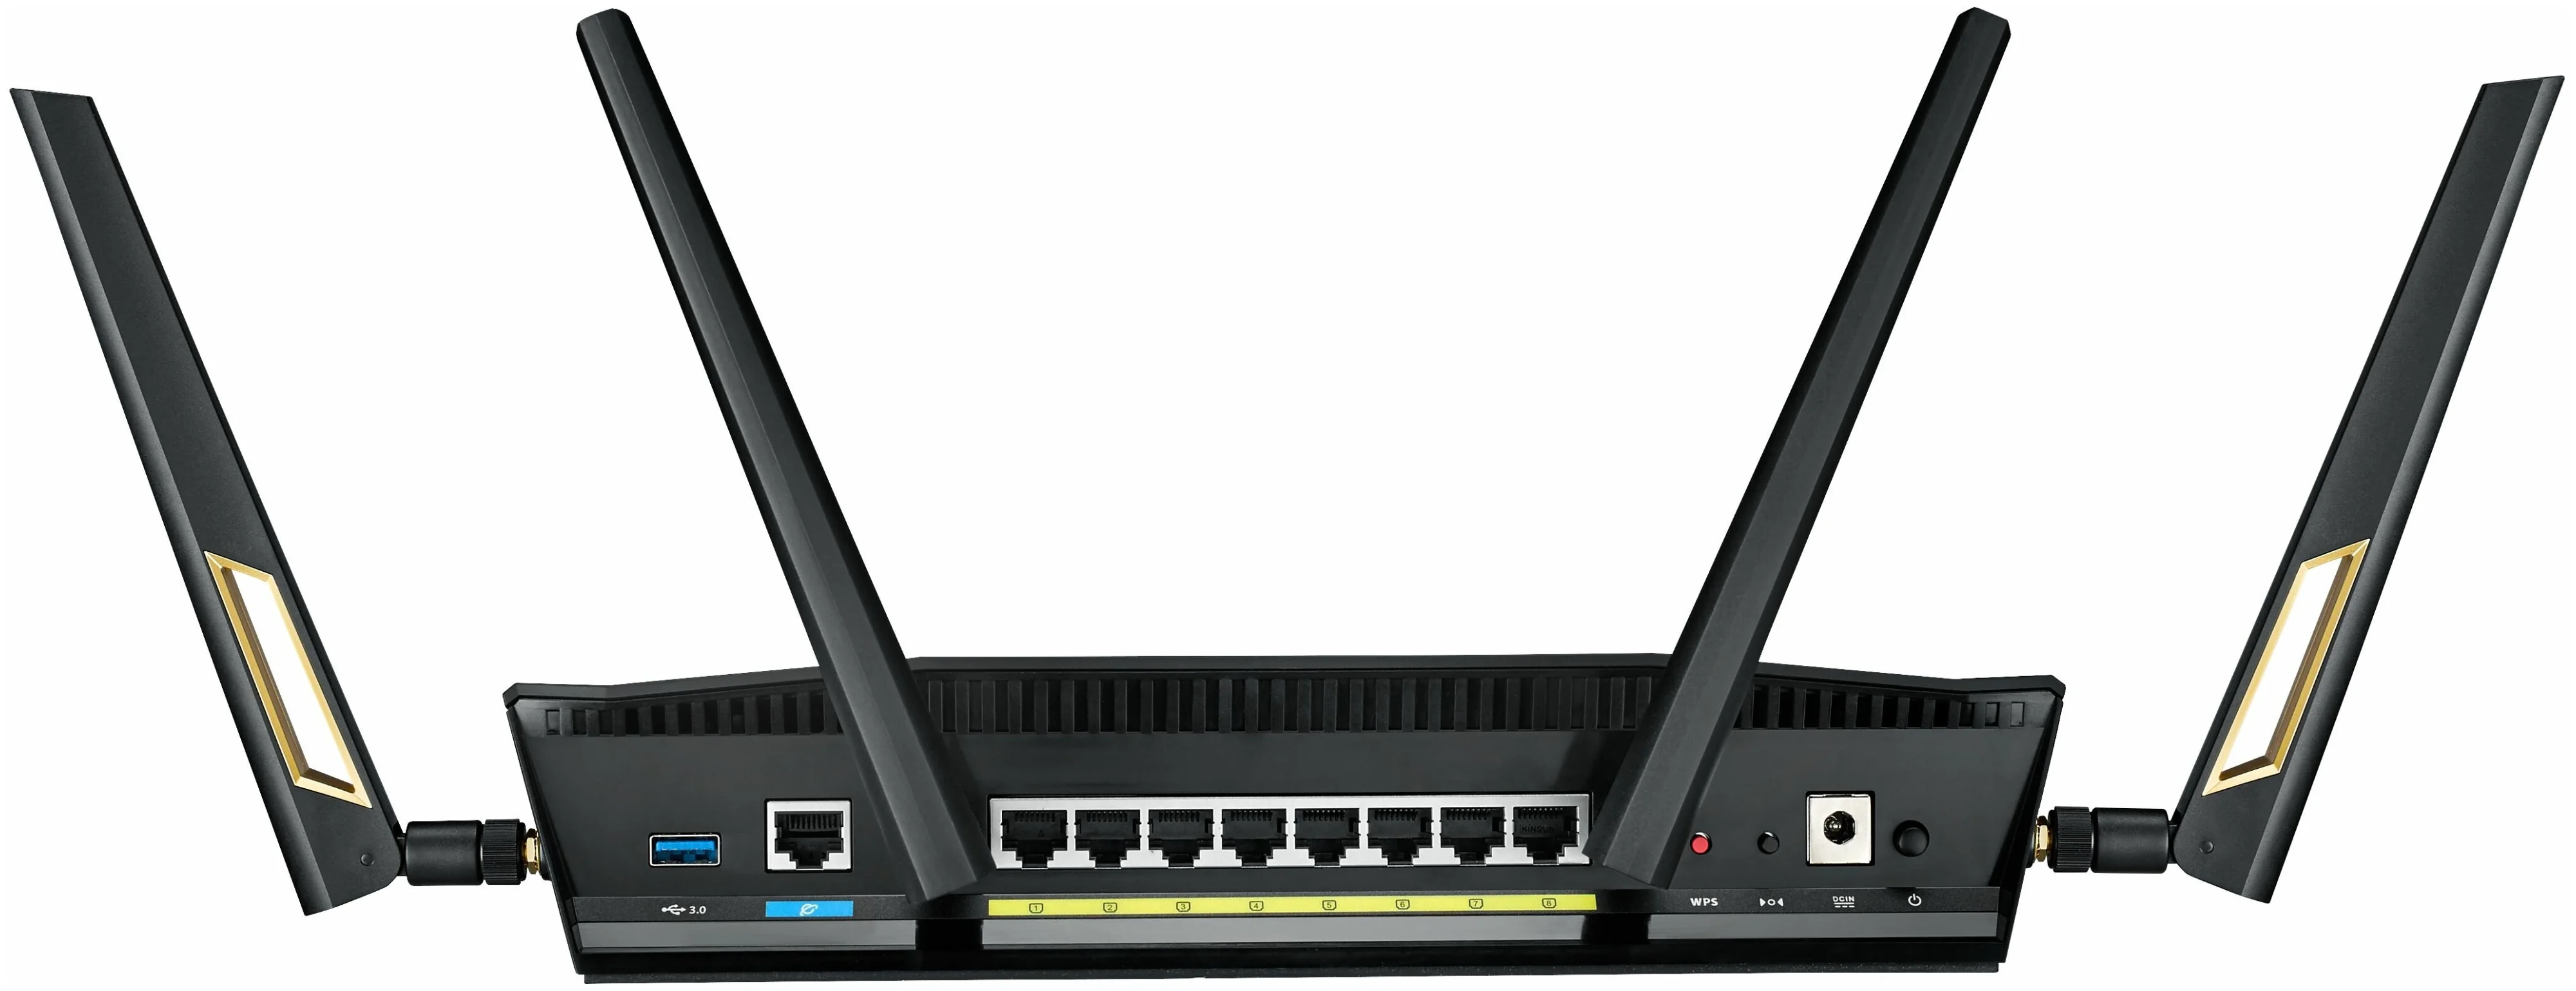 Wi-Fi ASUS RT-AX88U - функции и особенности: UPnP AV-сервер, поддержка IPv6, режим моста